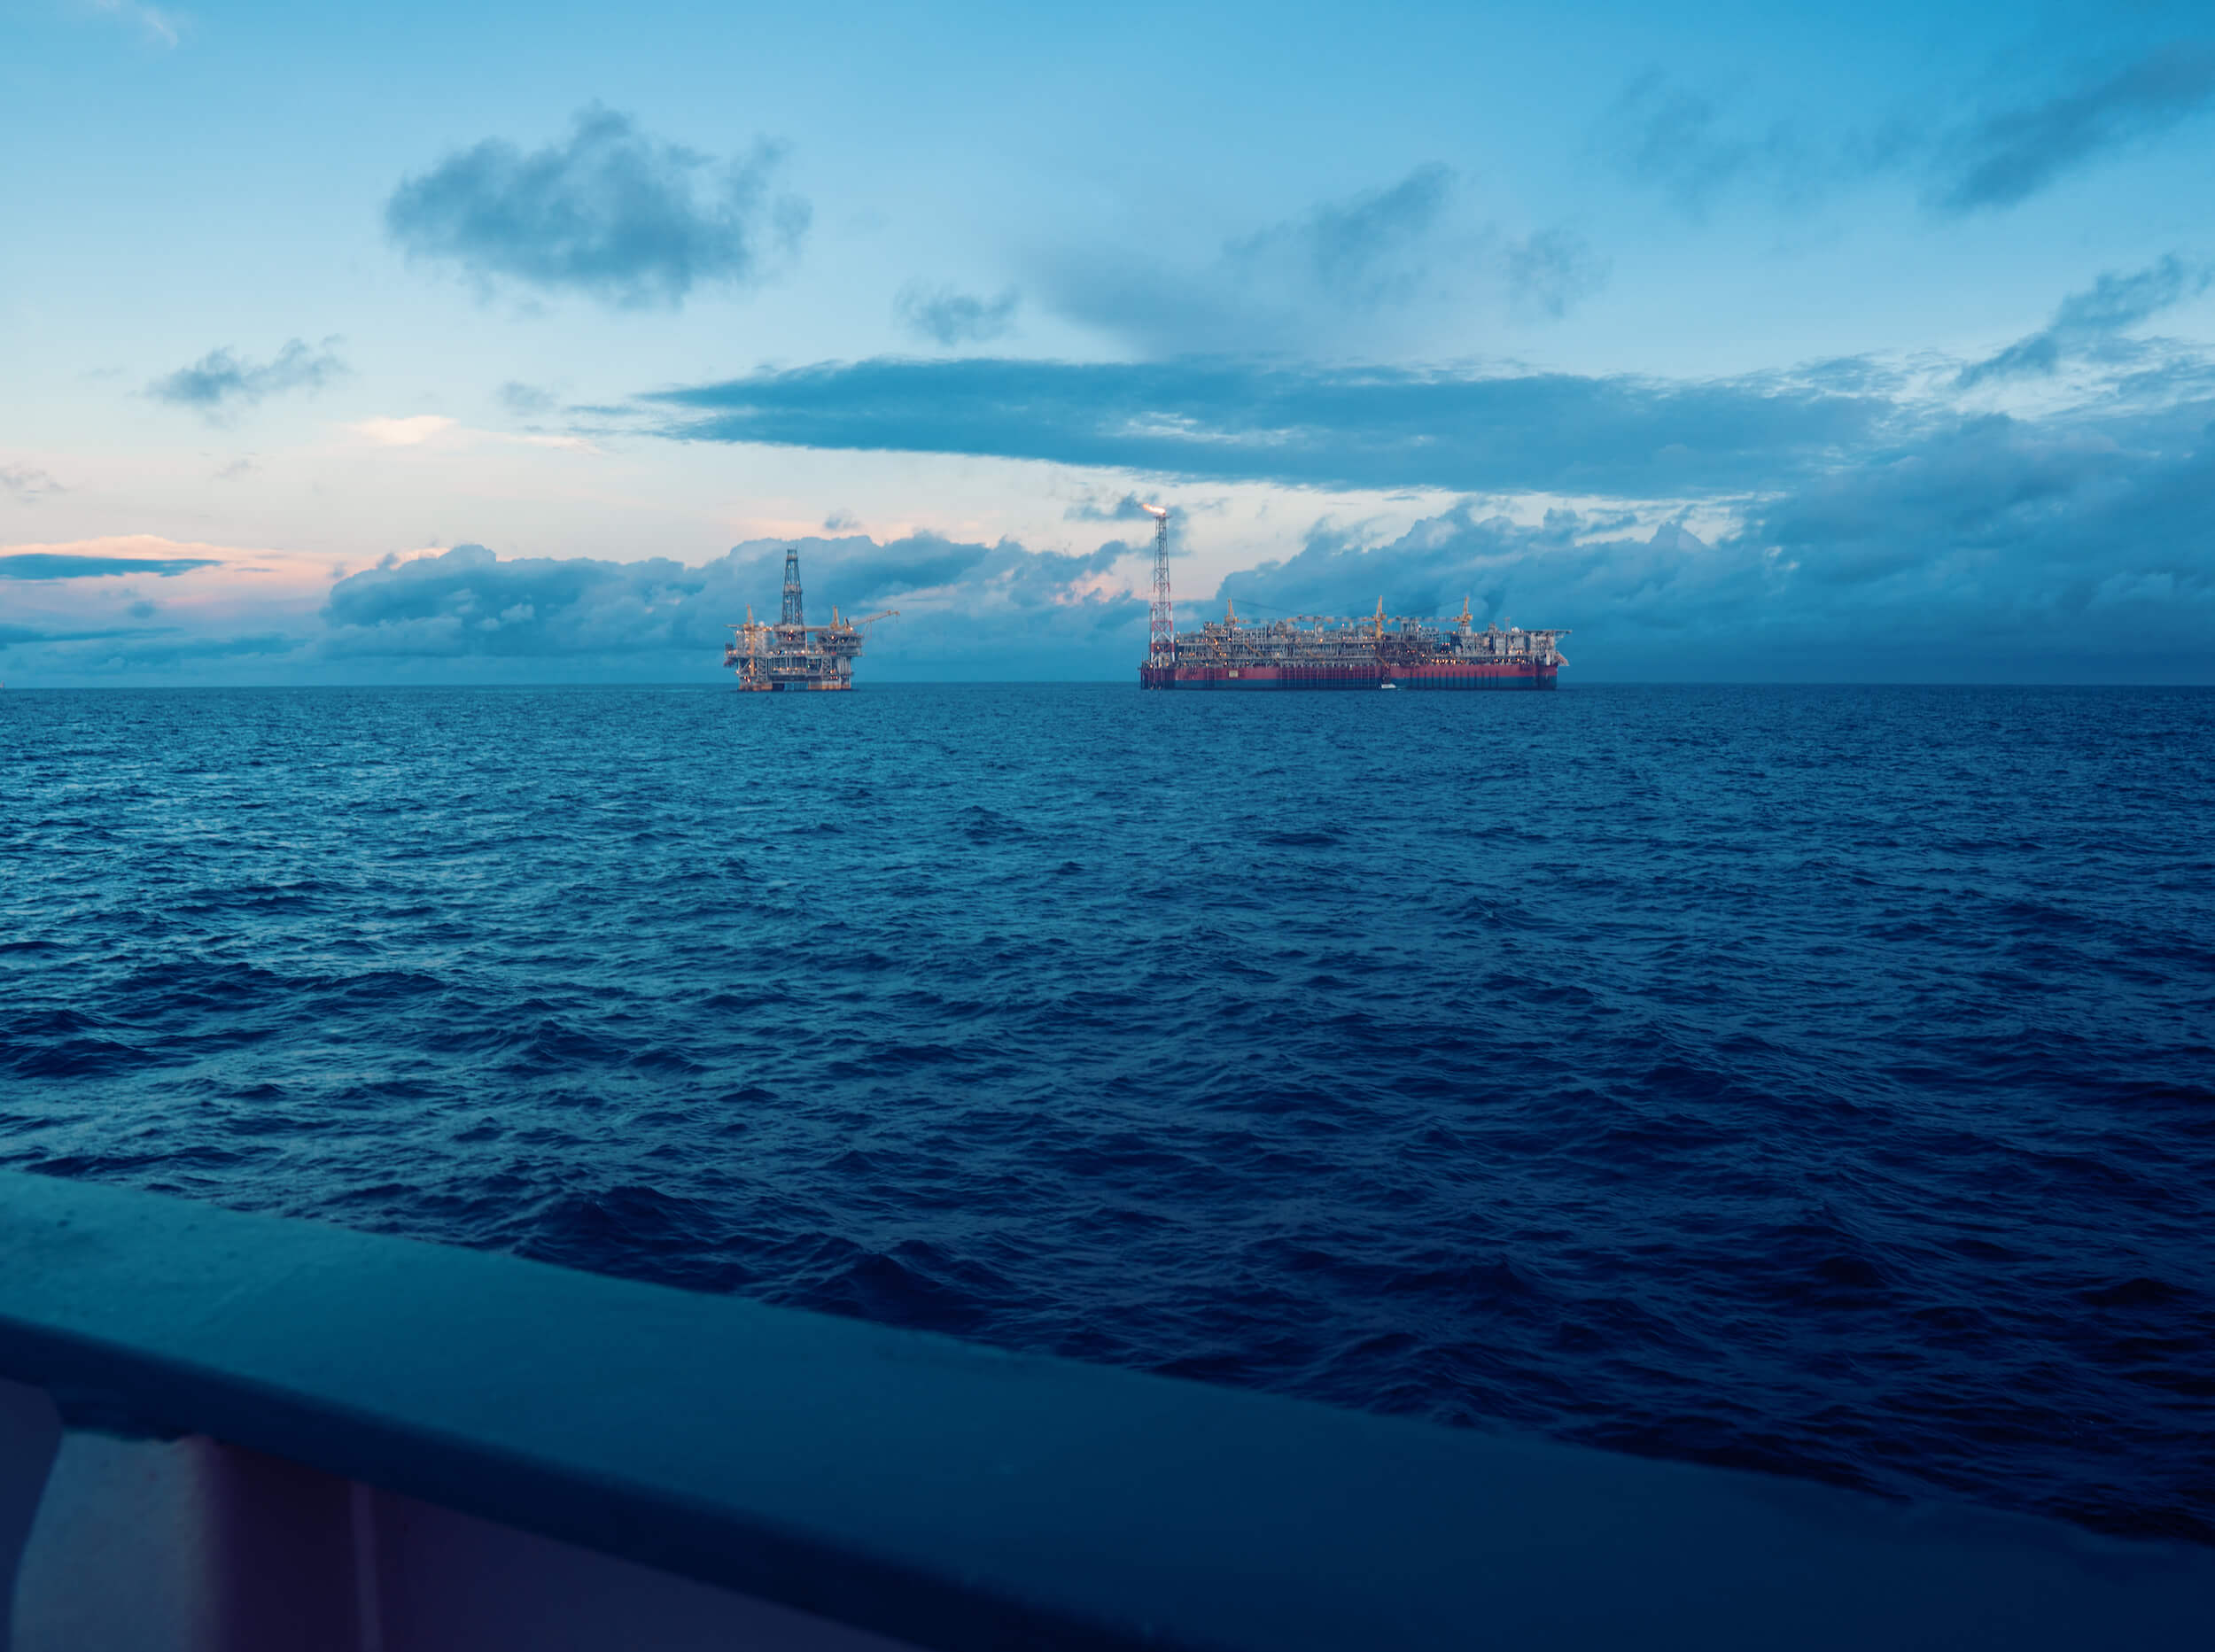 fpso-tanker-vessel-near-oil-rig-platform-offshore-2021-09-03-20-41-35-utc